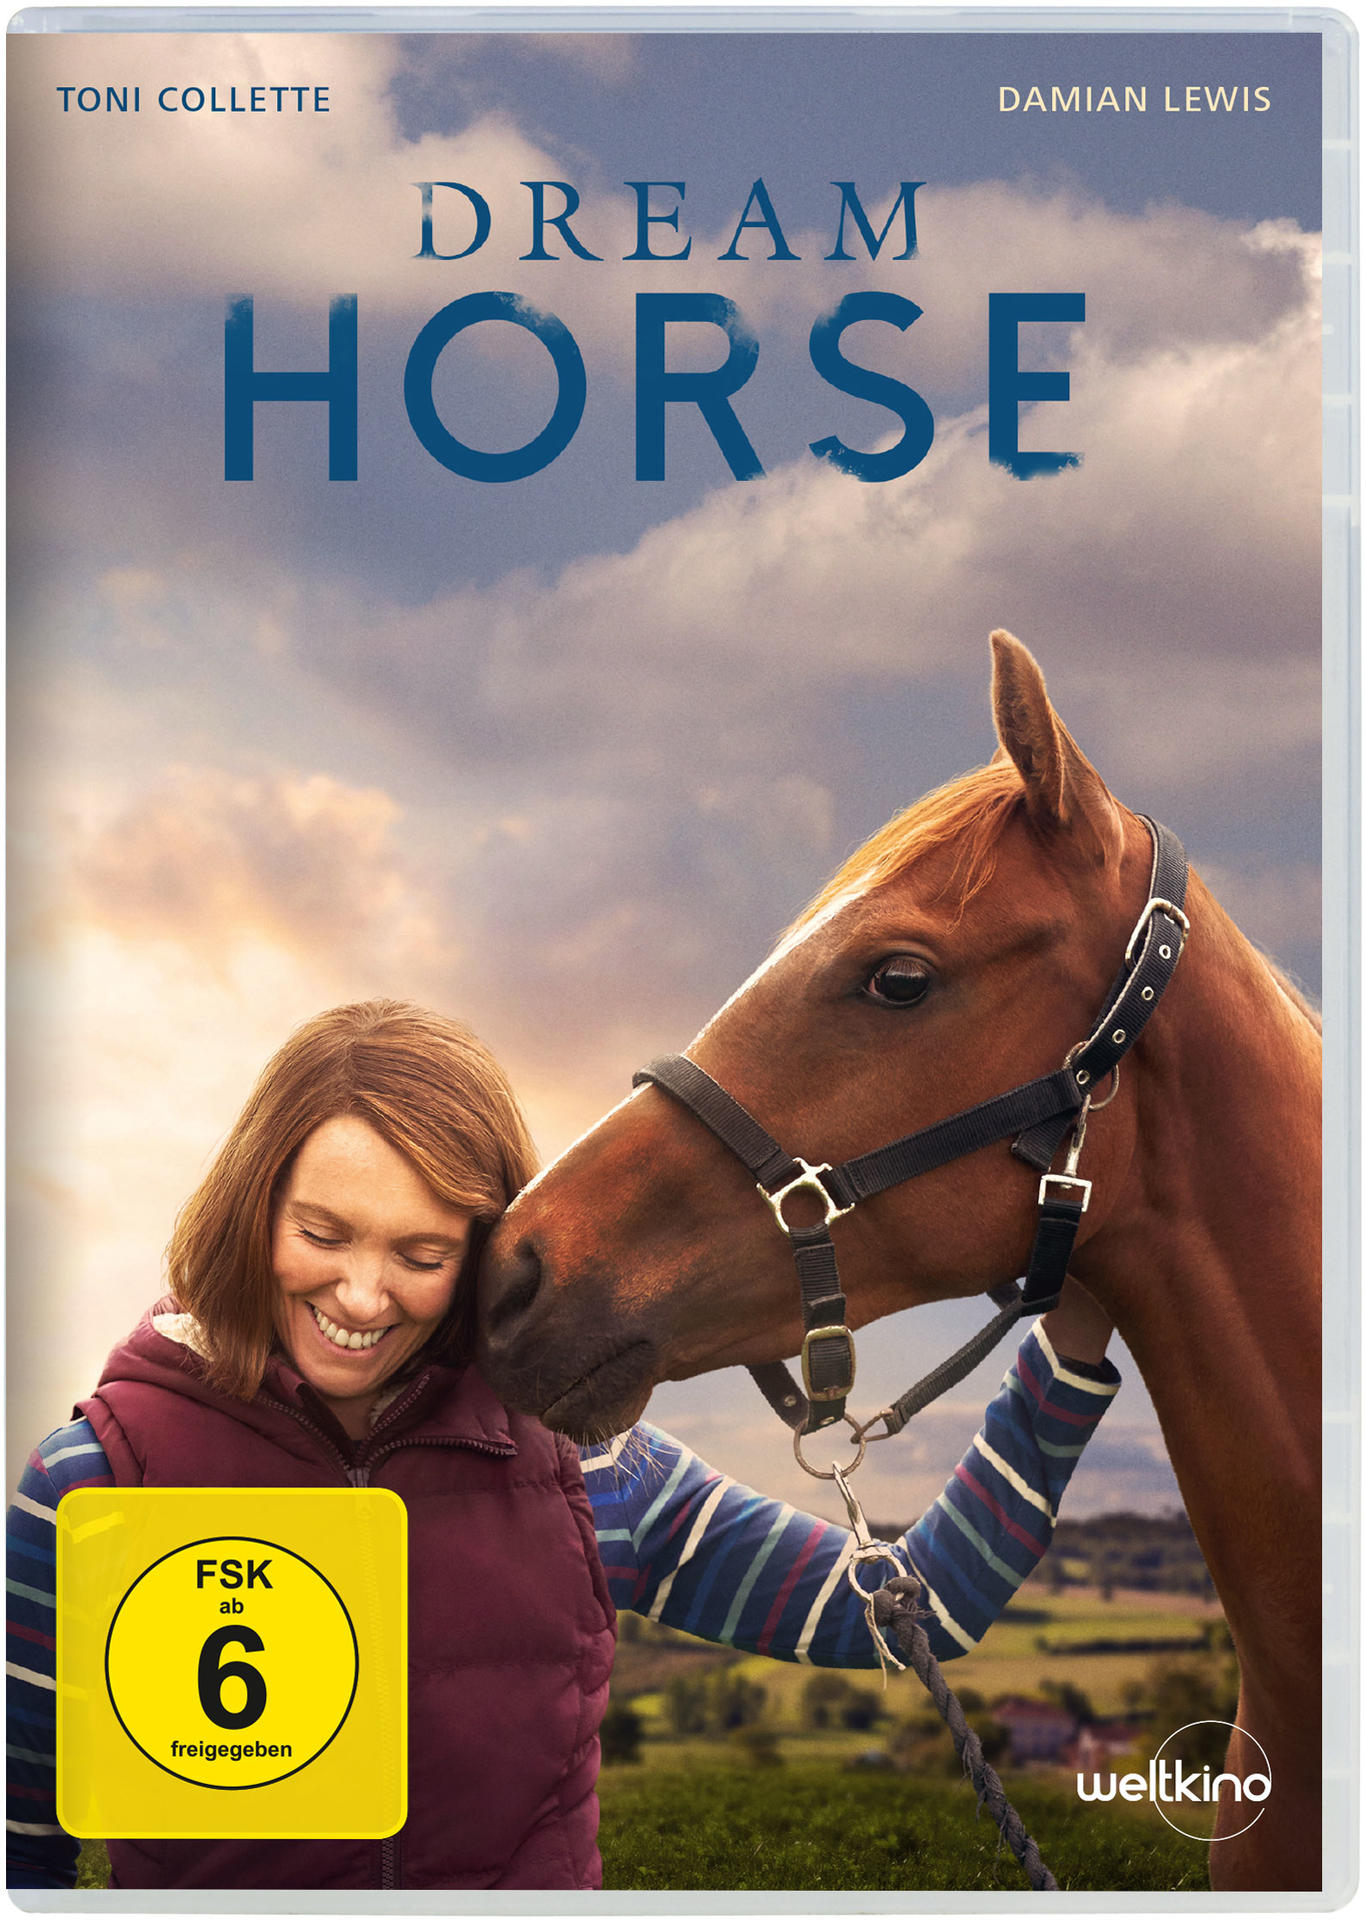 DVD Horse Dream